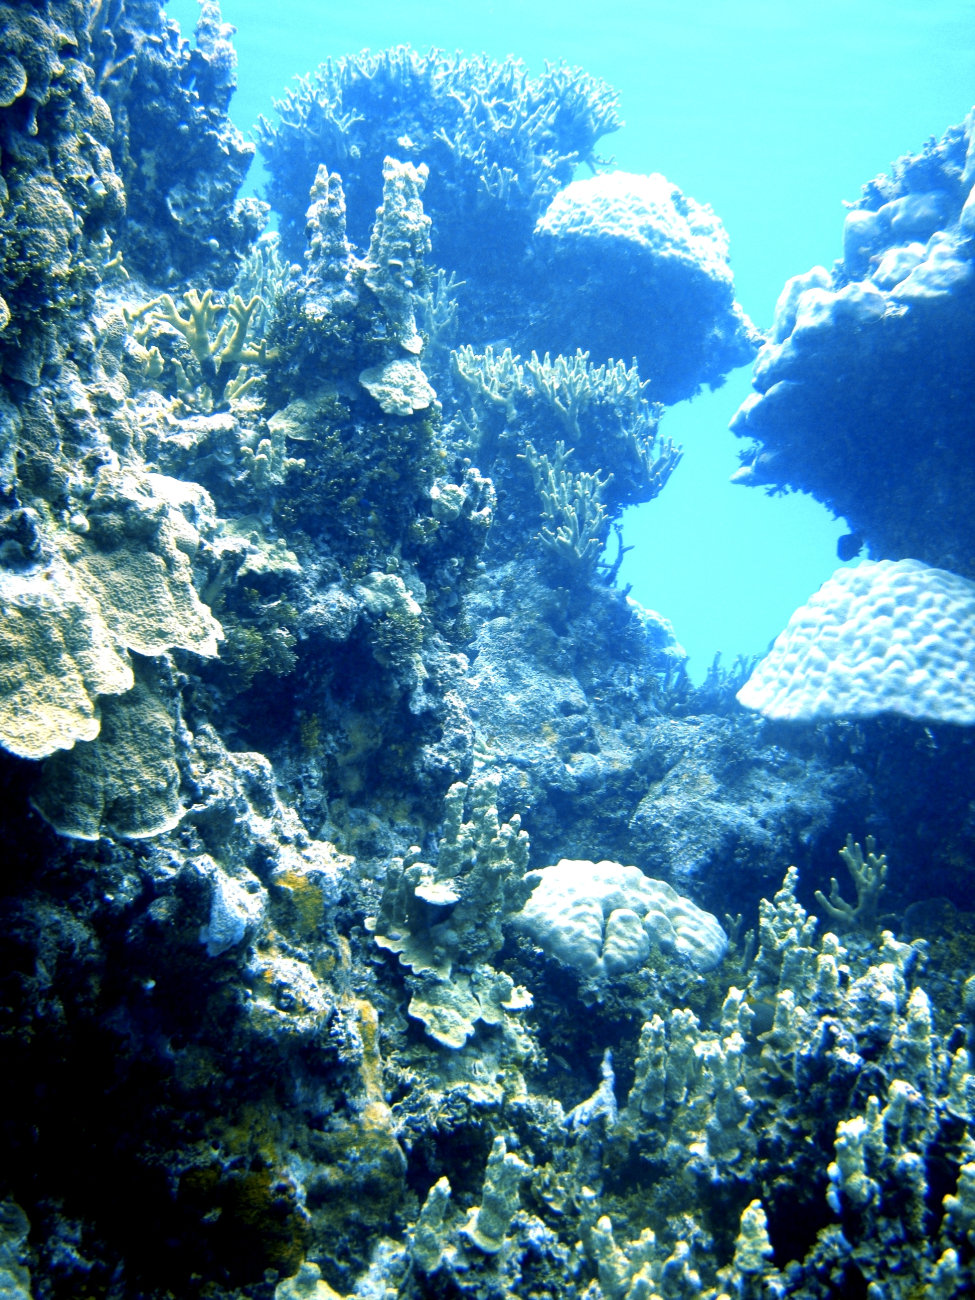 Multiple scractinian coral species